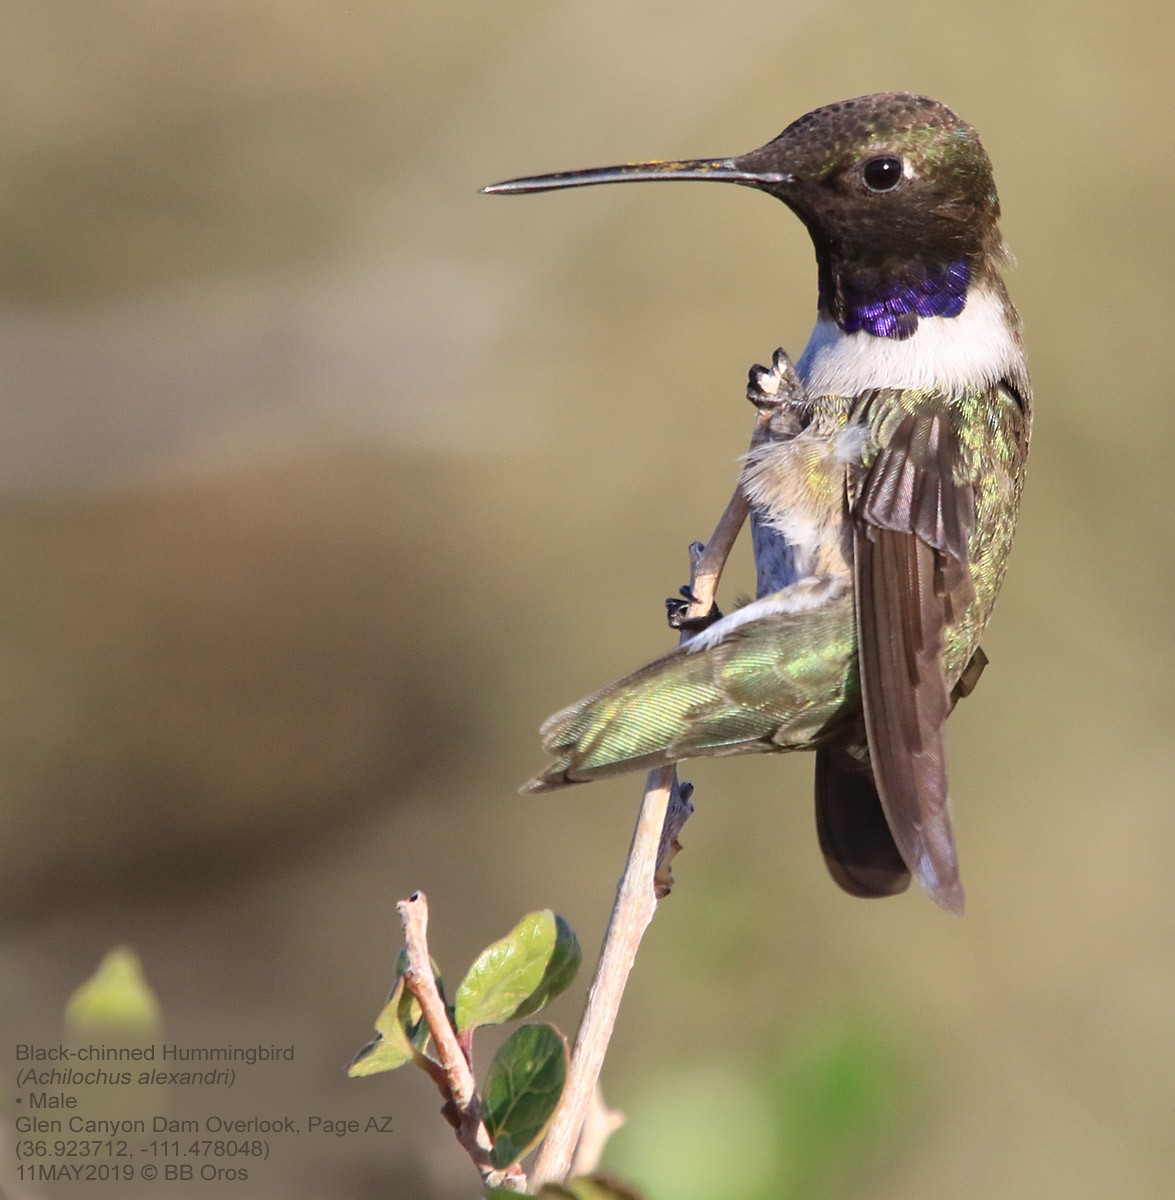 Black-chinned Hummingbird - BB Oros